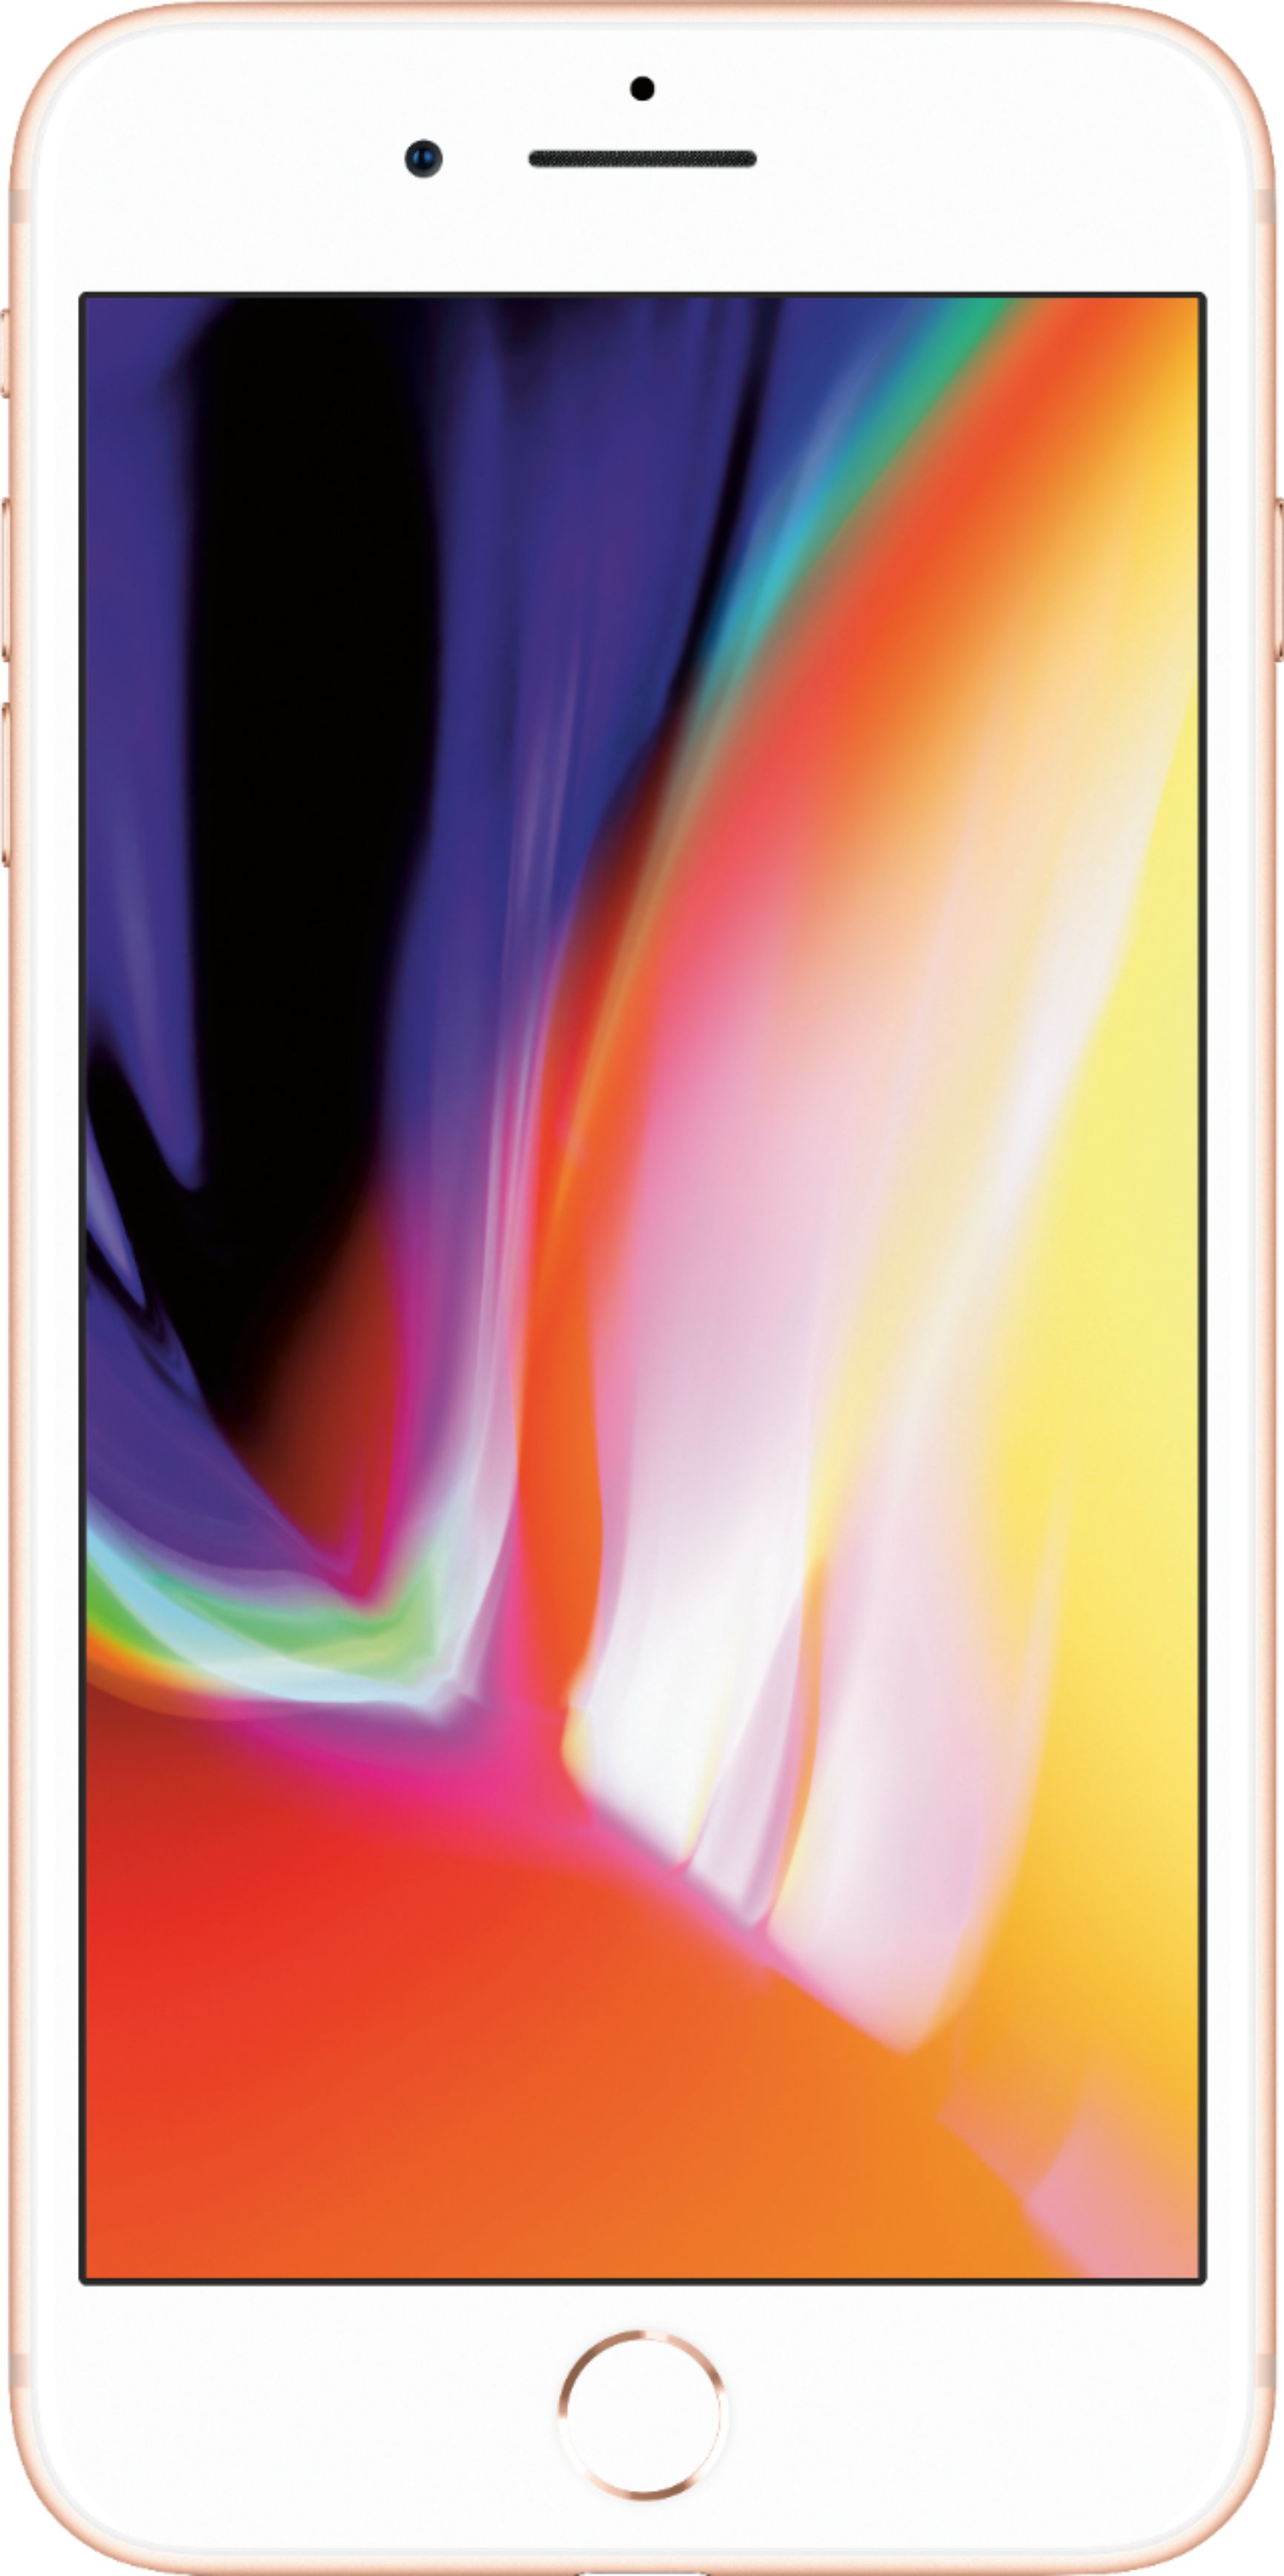 Apple - iPhone 8 Plus 256GB - Gold (AT&T)